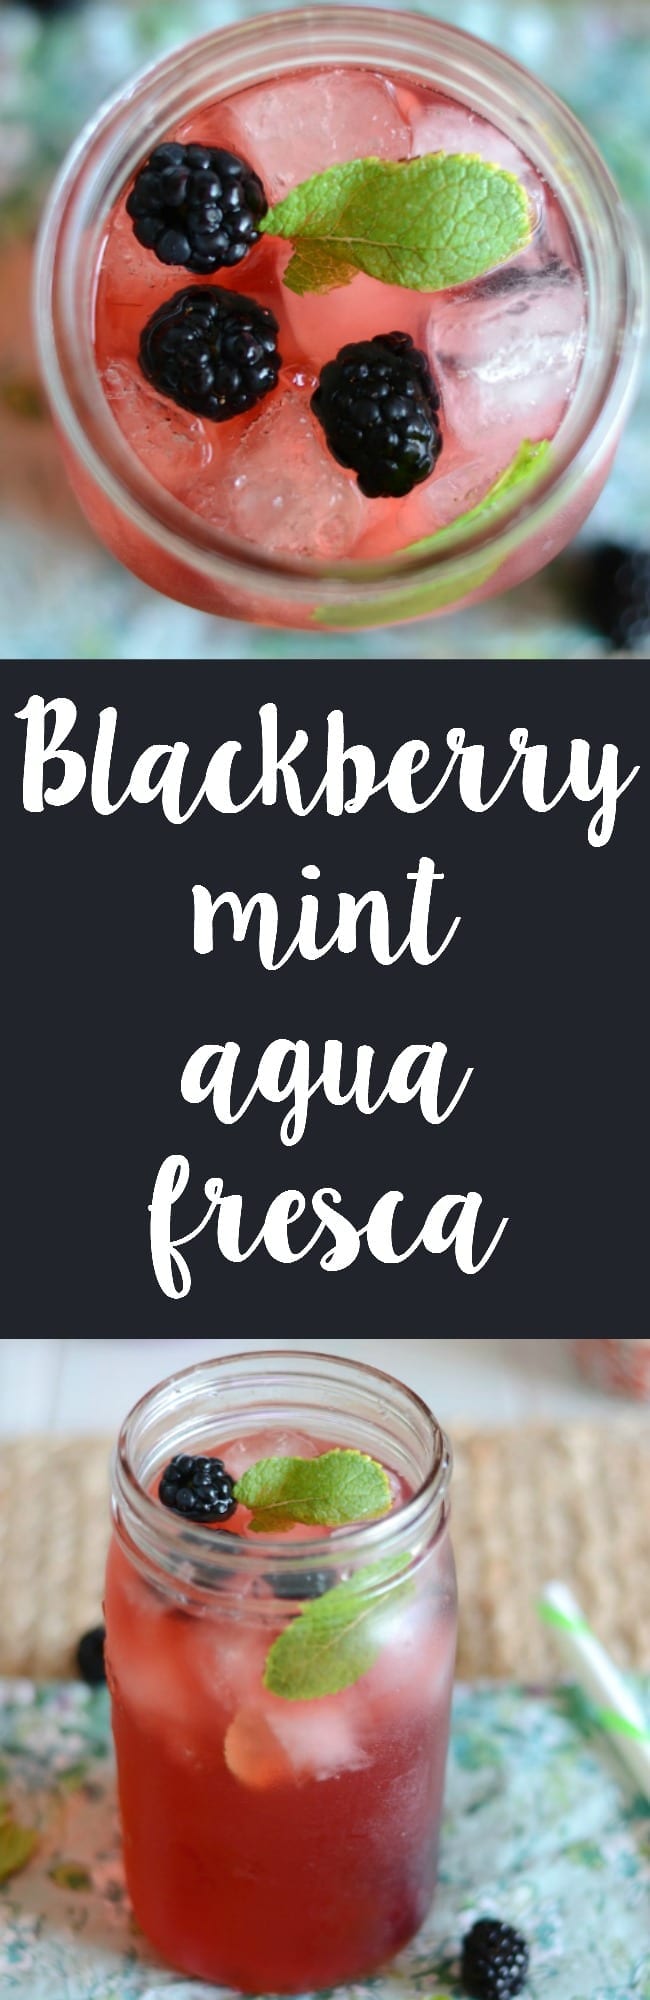 Homemade blackberry mint agua fresca recipe